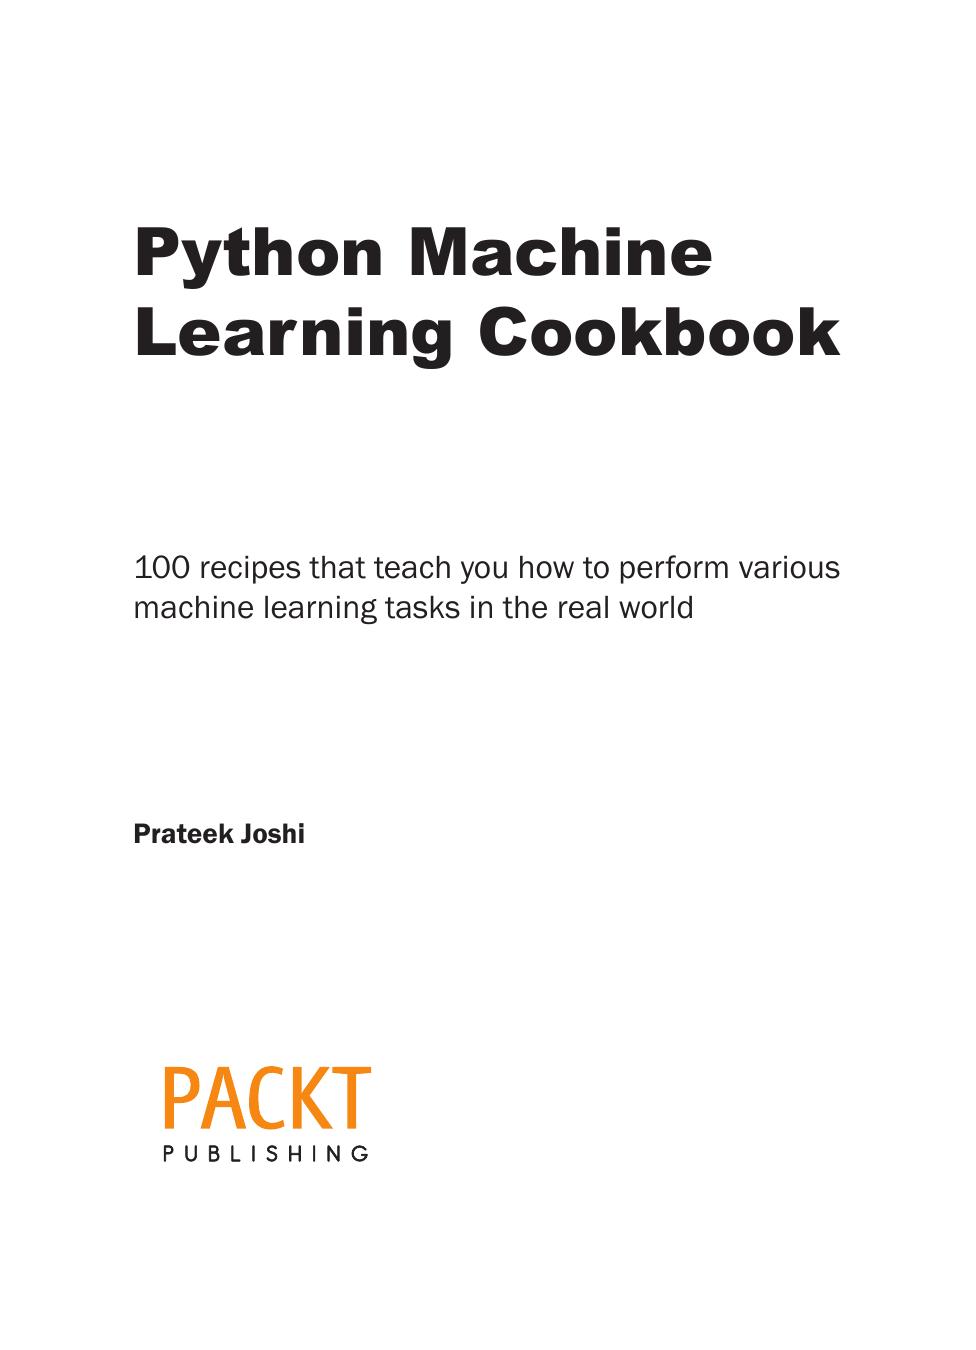 Python Machine Learning Cookbook by Prateek Joshi